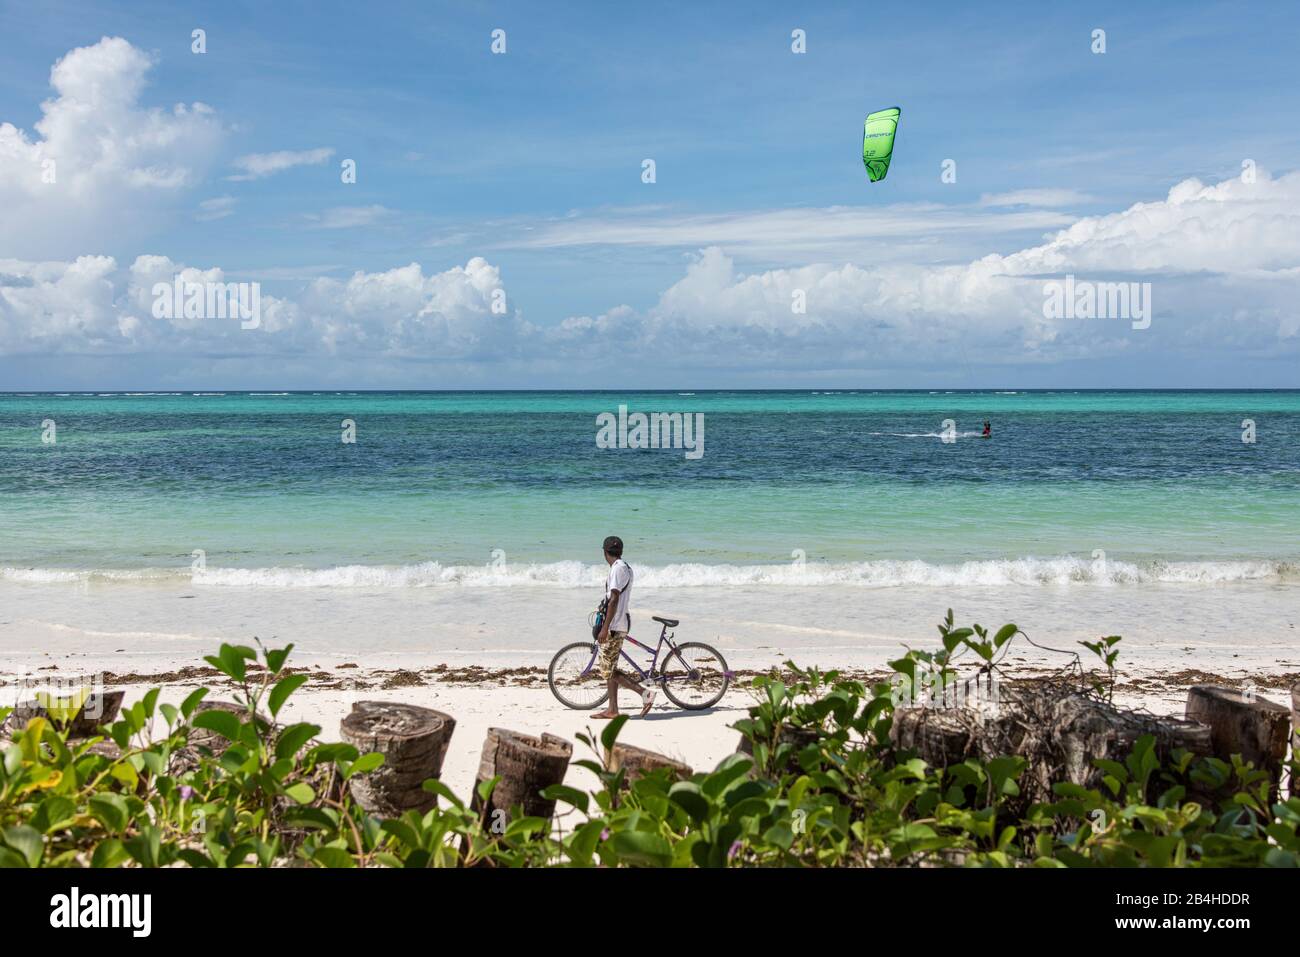 Zanzibar, Tanzania: dream beach on the east coast of this African island in the Indian Ocean. Islander pushes his bike on the beach, kitesurfers in the background. Stock Photo